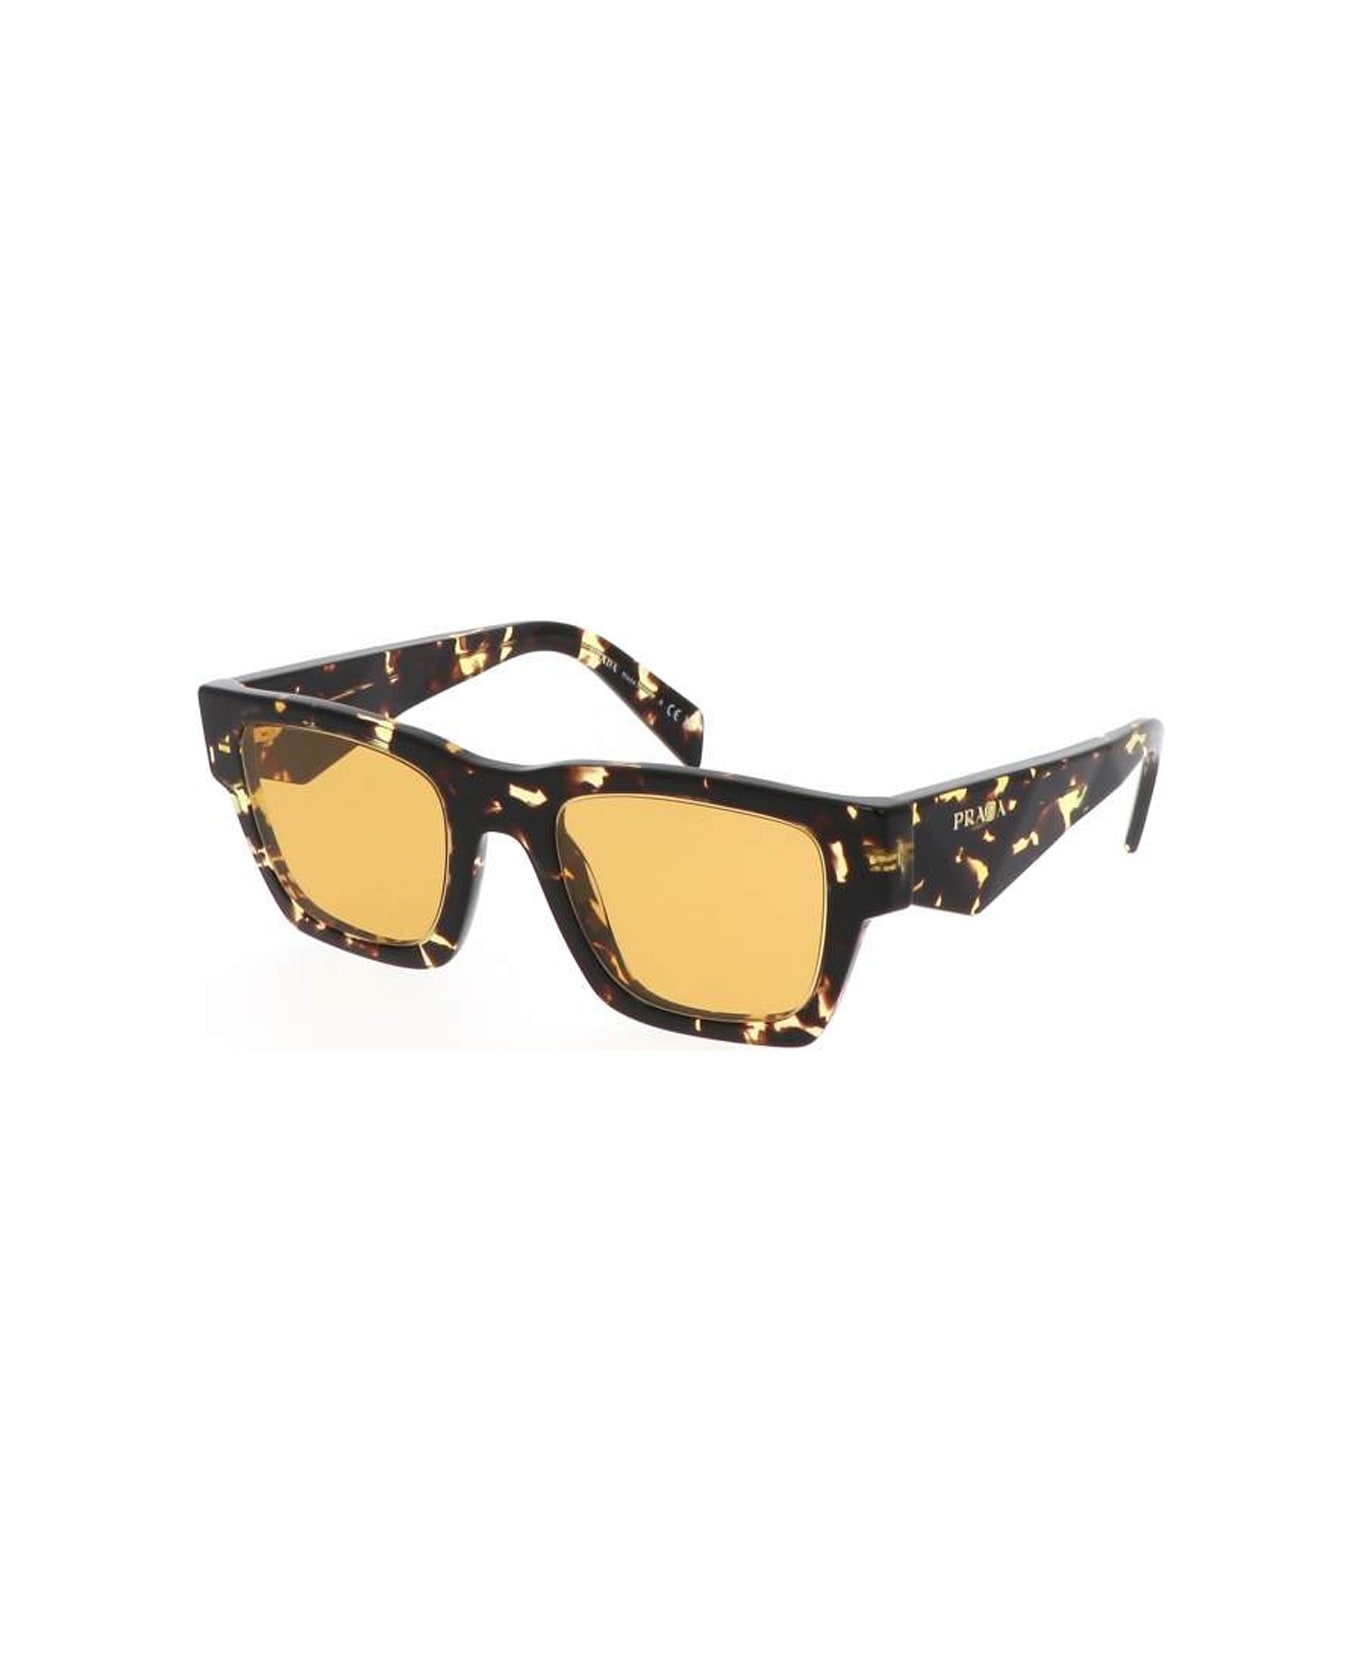 Prada Eyewear Pra06s 16o10c Sunglasses - Giallo